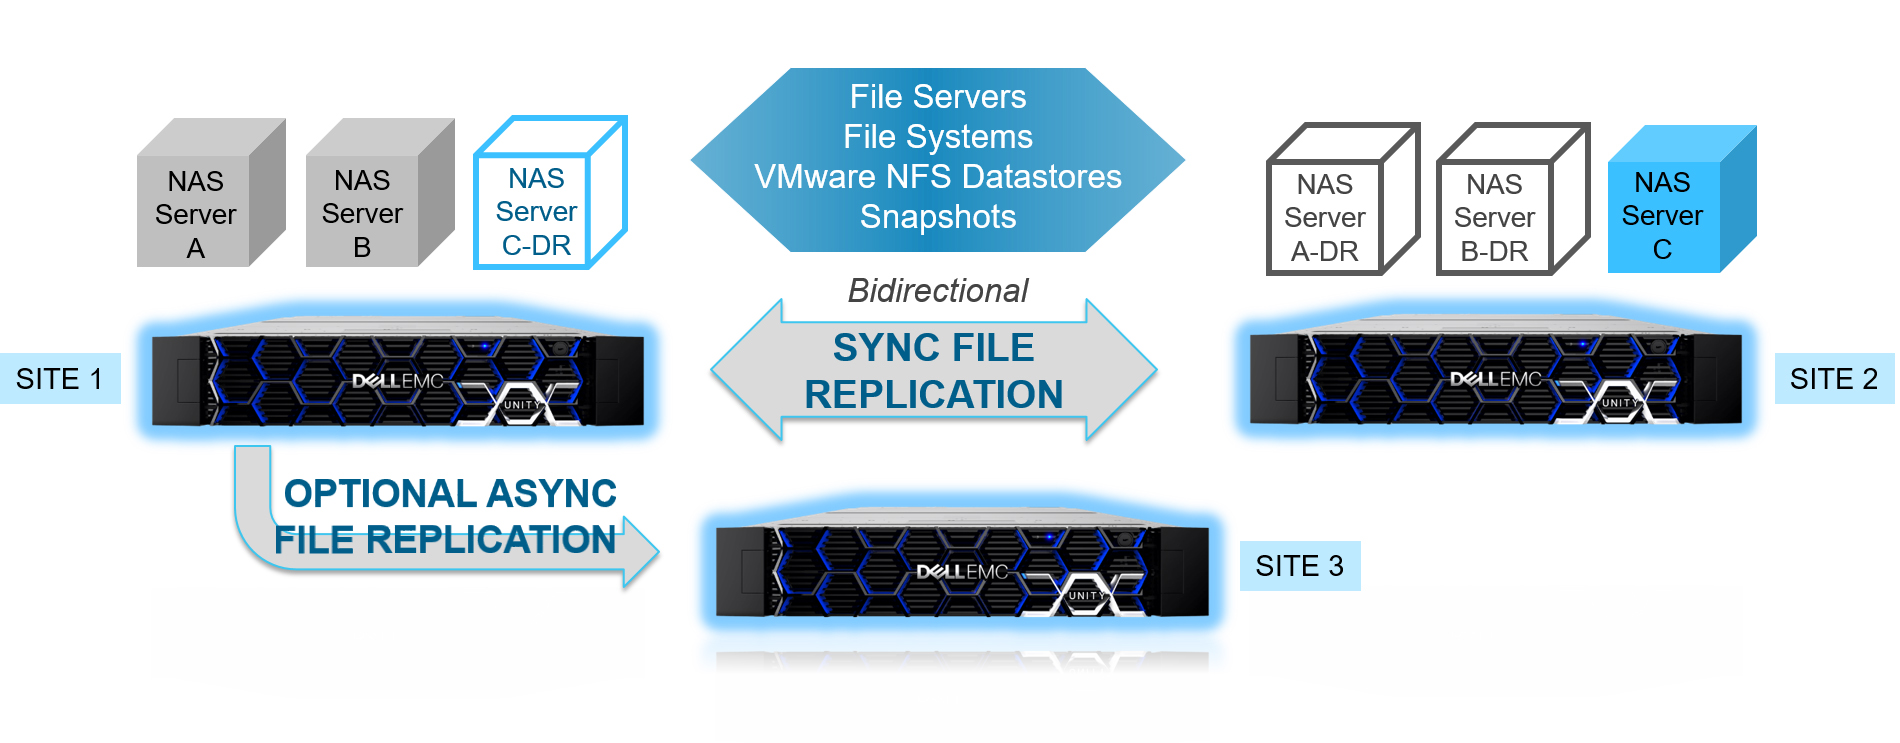 02 dellemc Dell EMC เปิดตัว ระบบปฏิบัติการเวอร์ชั่นใหม่ล่าสุดบน Unity Midrange Storage ซึ่งมาพร้อมกับขีดความสามารถที่เพิ่มขึ้น ในด้าน Advance Data Reduction, Data Protection และ Management